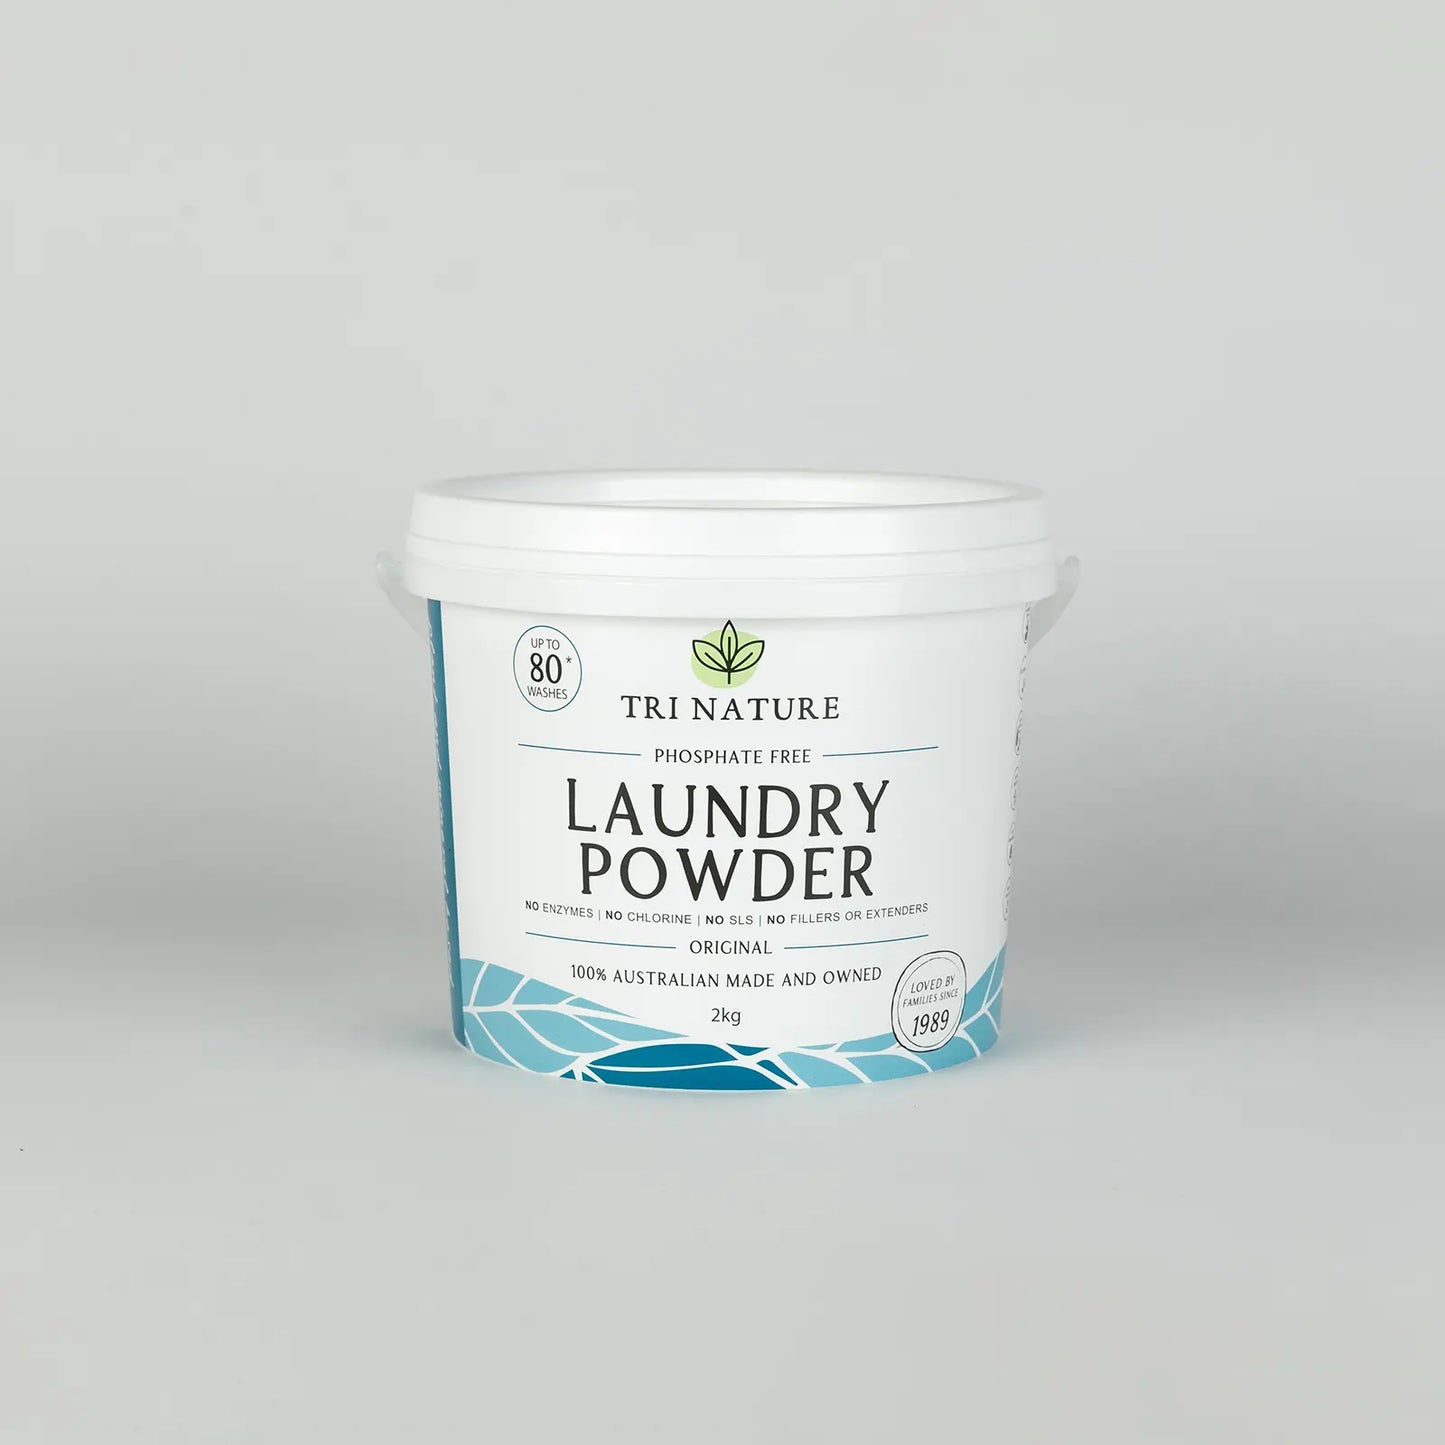 Tri Nature Alpha Plus Laundry Powder  - Original